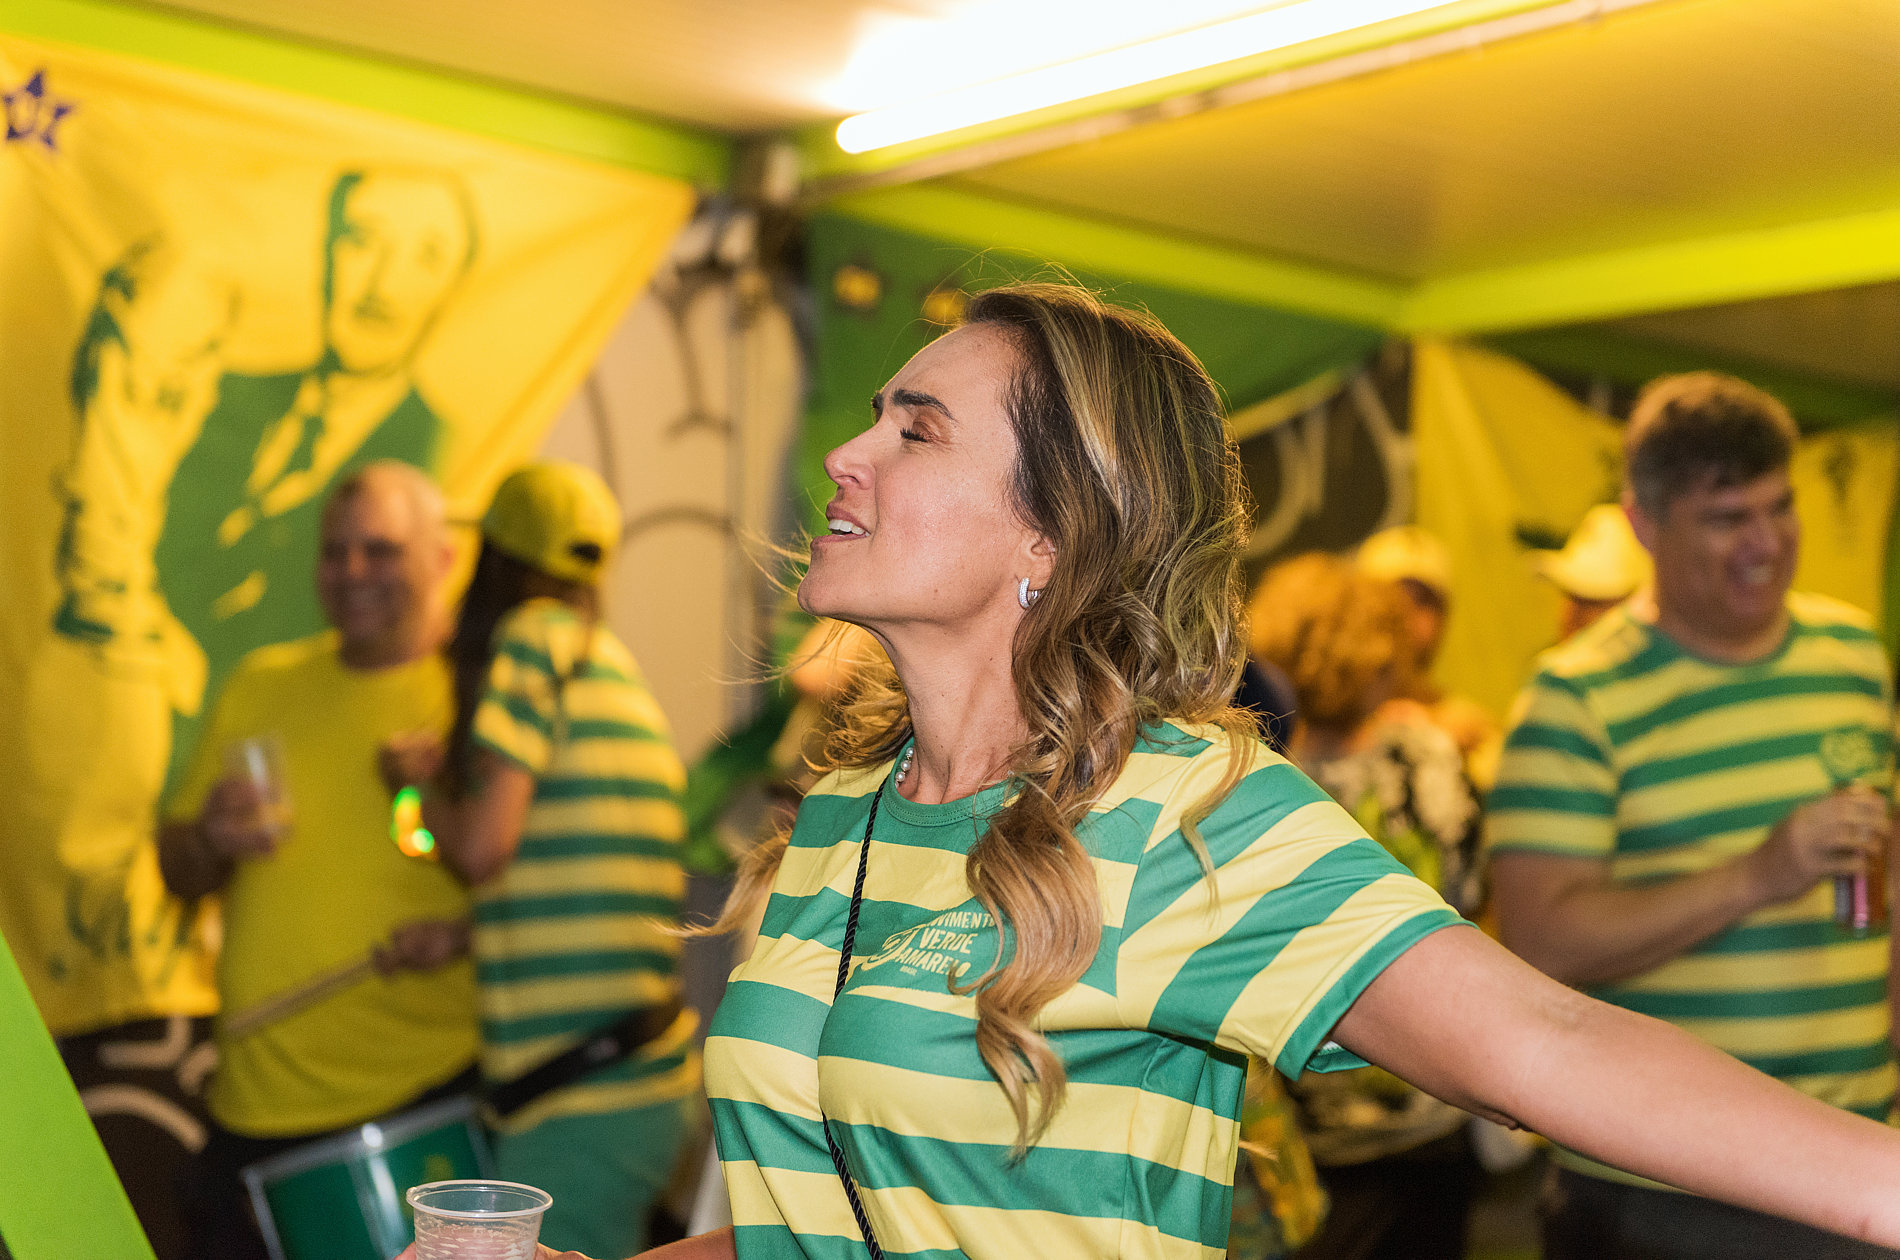 Movimento Verde e Amarelo - Esquenta | Luciano Braz Fotografia